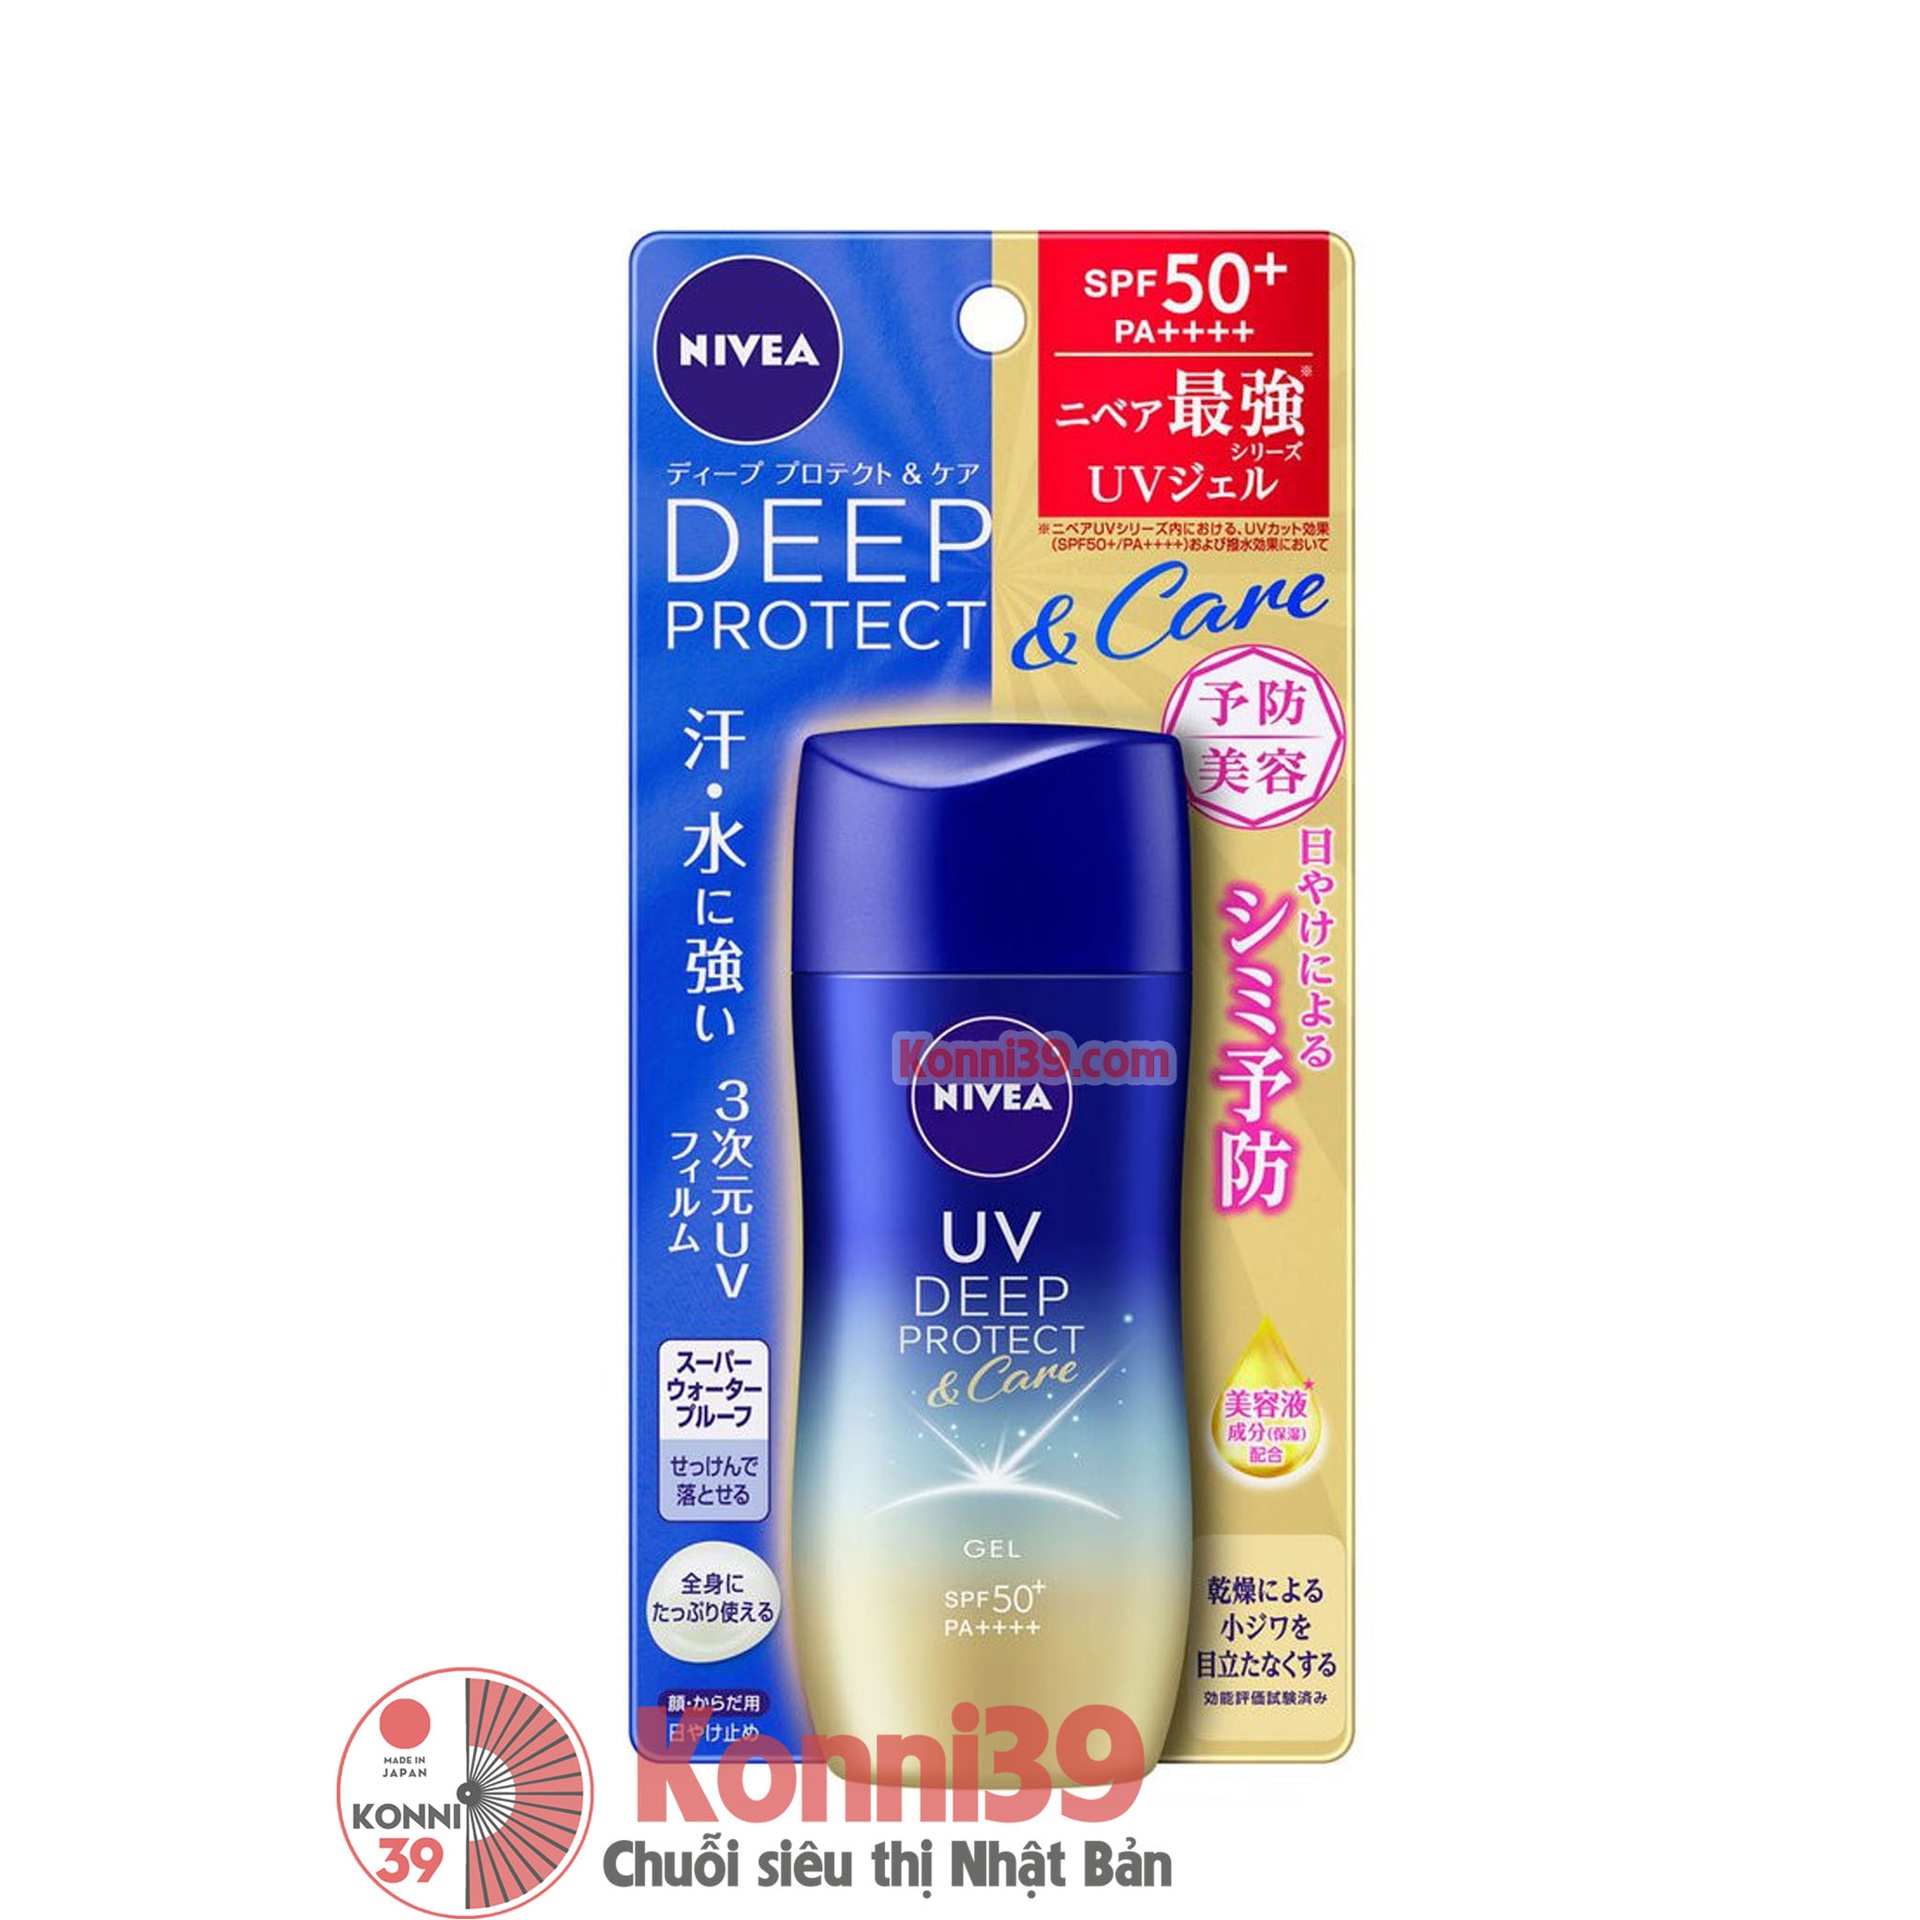 Kem chống nắng NIVEA UV Deep Protect & Care SPF50+PA++++ 80g